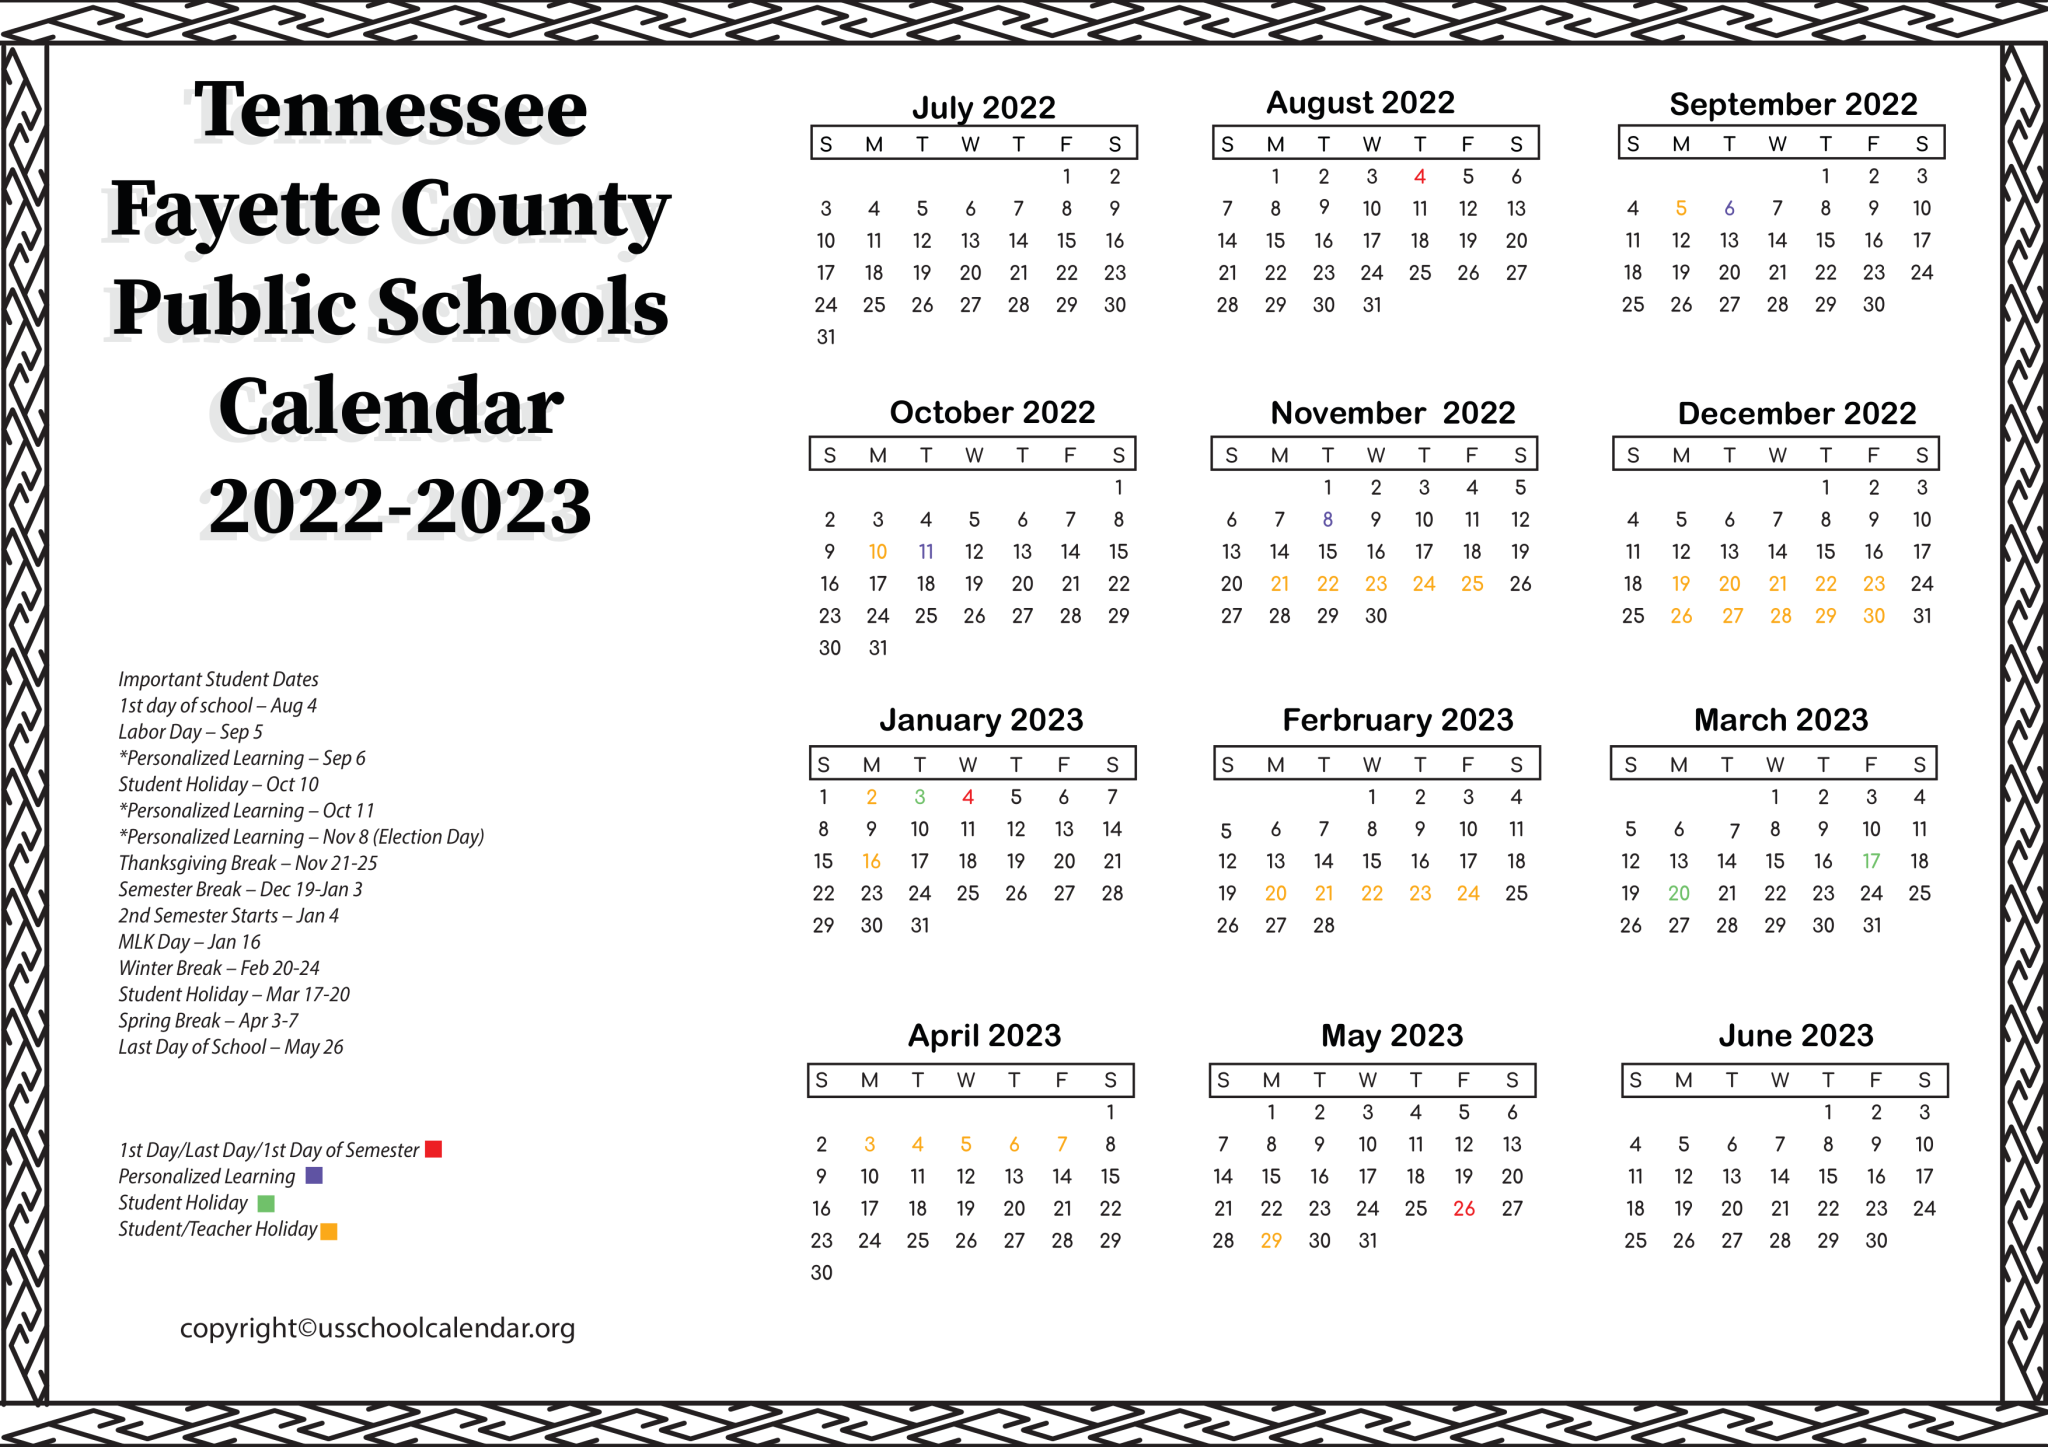 Tennessee Fayette County Public Schools Calendar 2022 2023